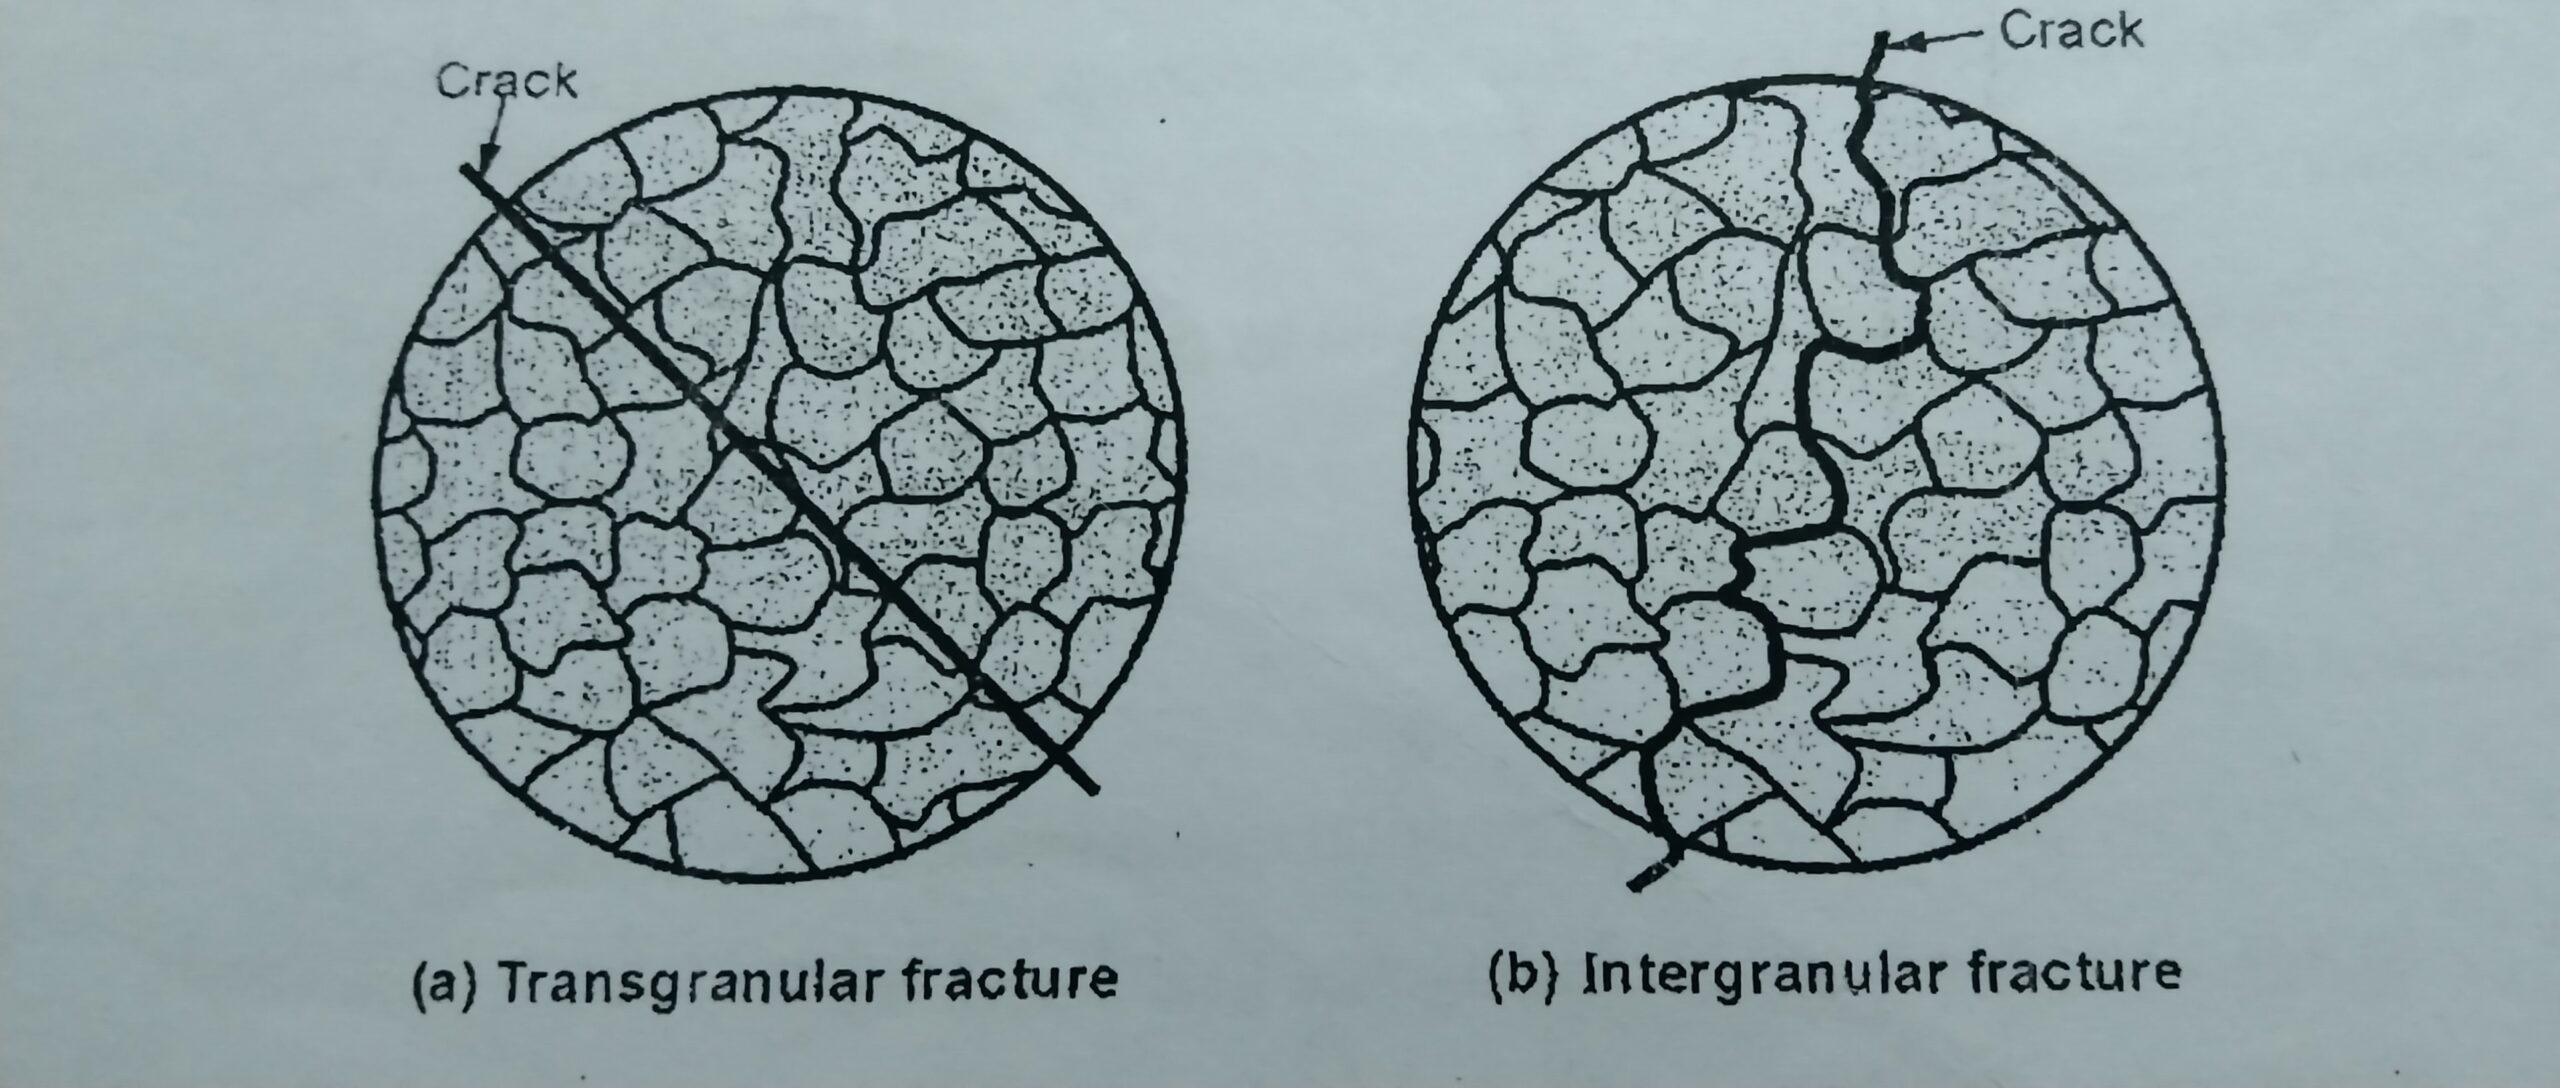 Transgranular Fracture & Intergranular Fracture